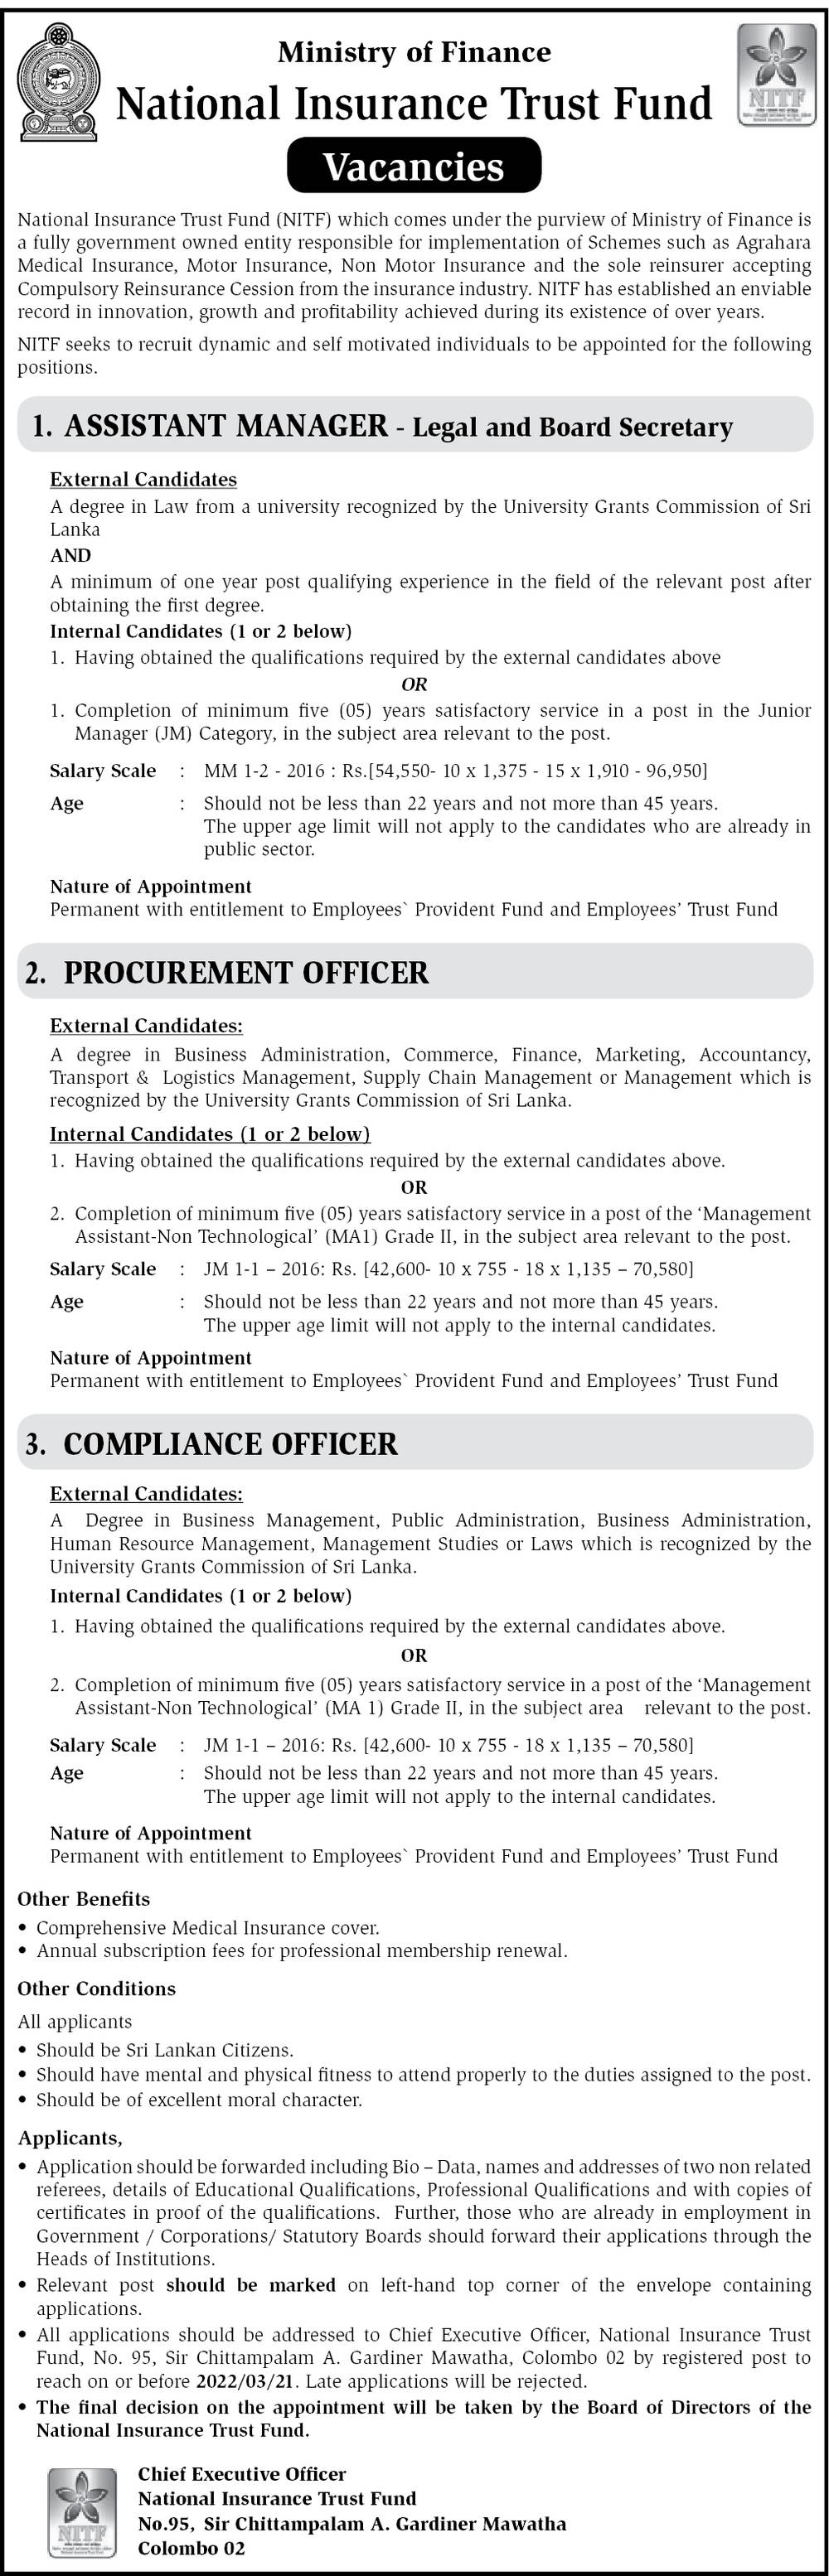 Ministry of Finance Jobs Vacancies 2022 English